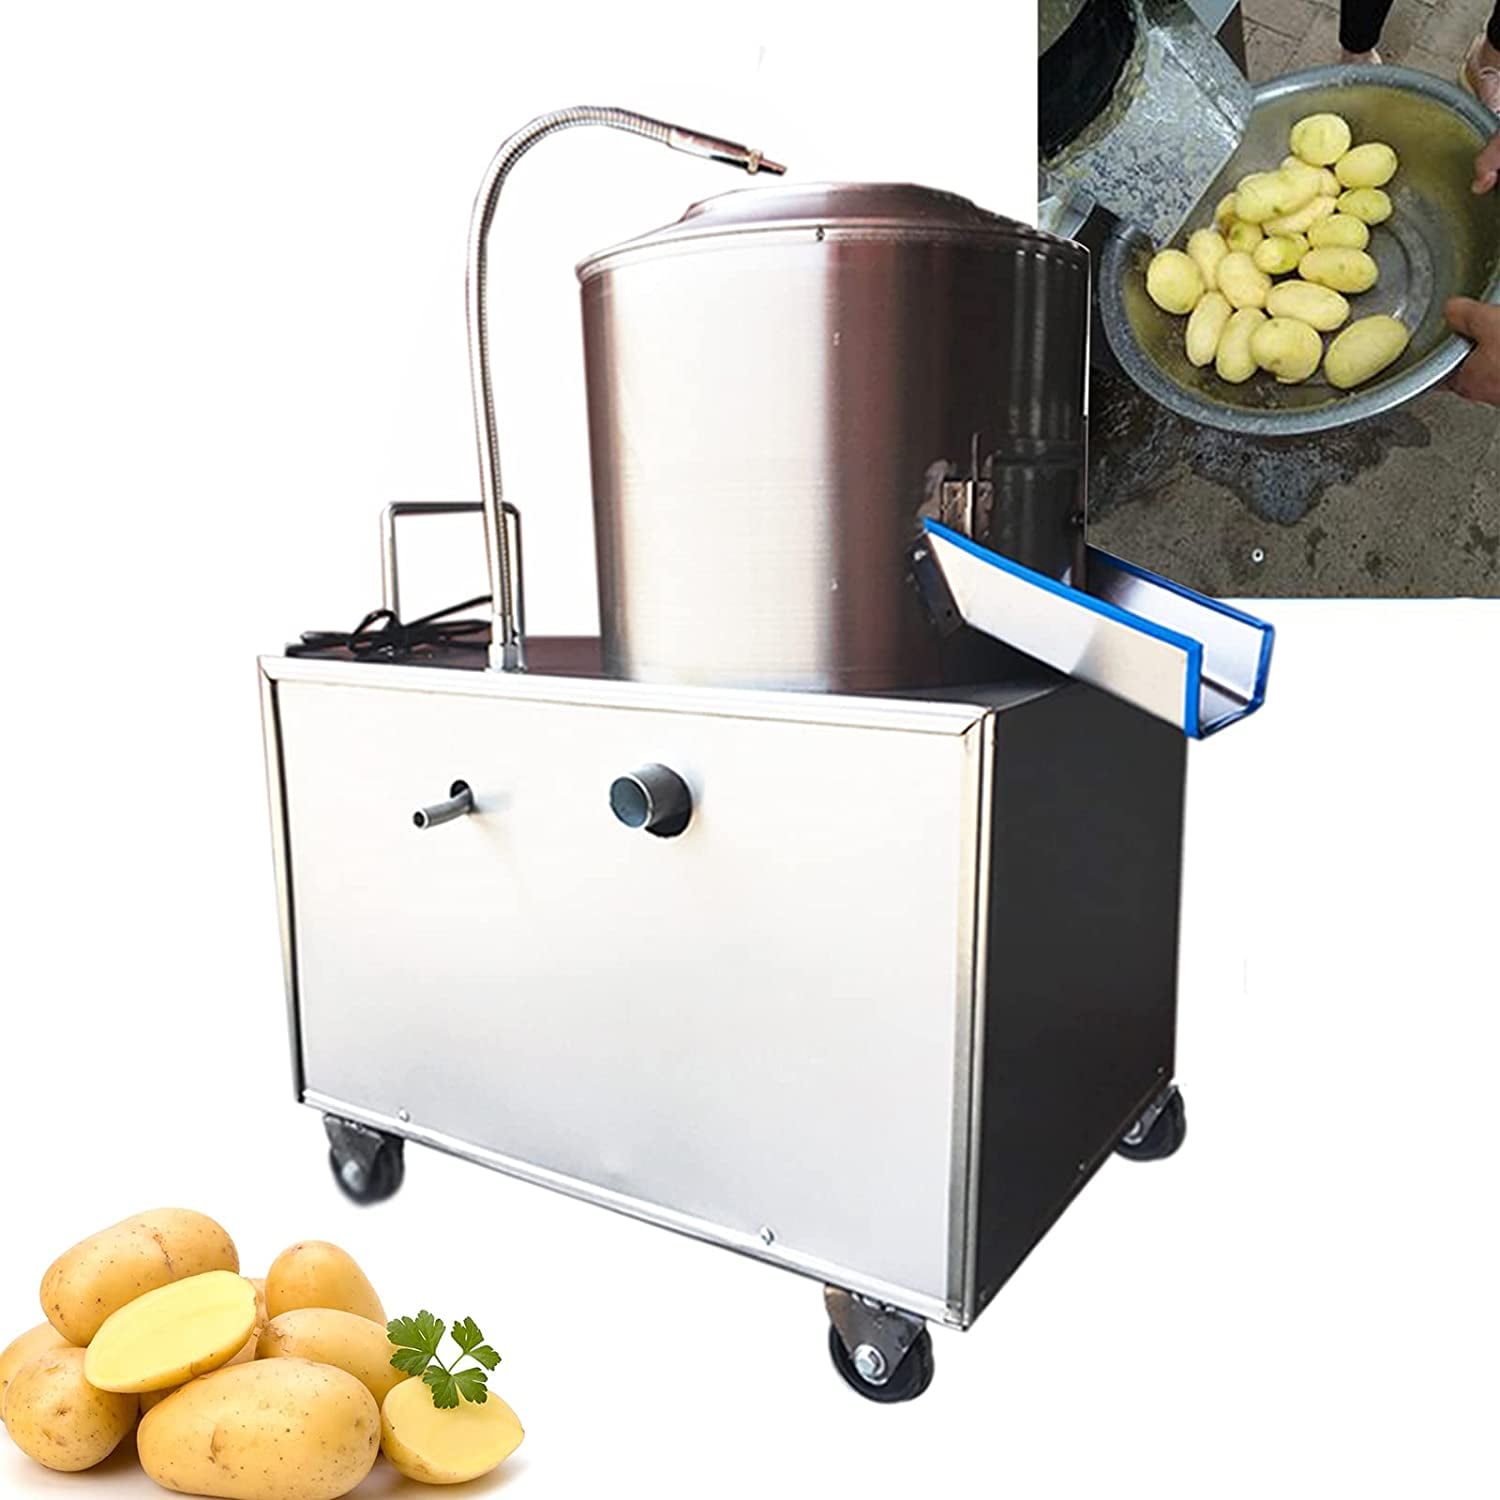 Electric Potato Peeler Commercial Potato Peeler Stainless Steel Potato  Peeling machine Peeler Washer with Caster Wheels, 10-15kg/time 